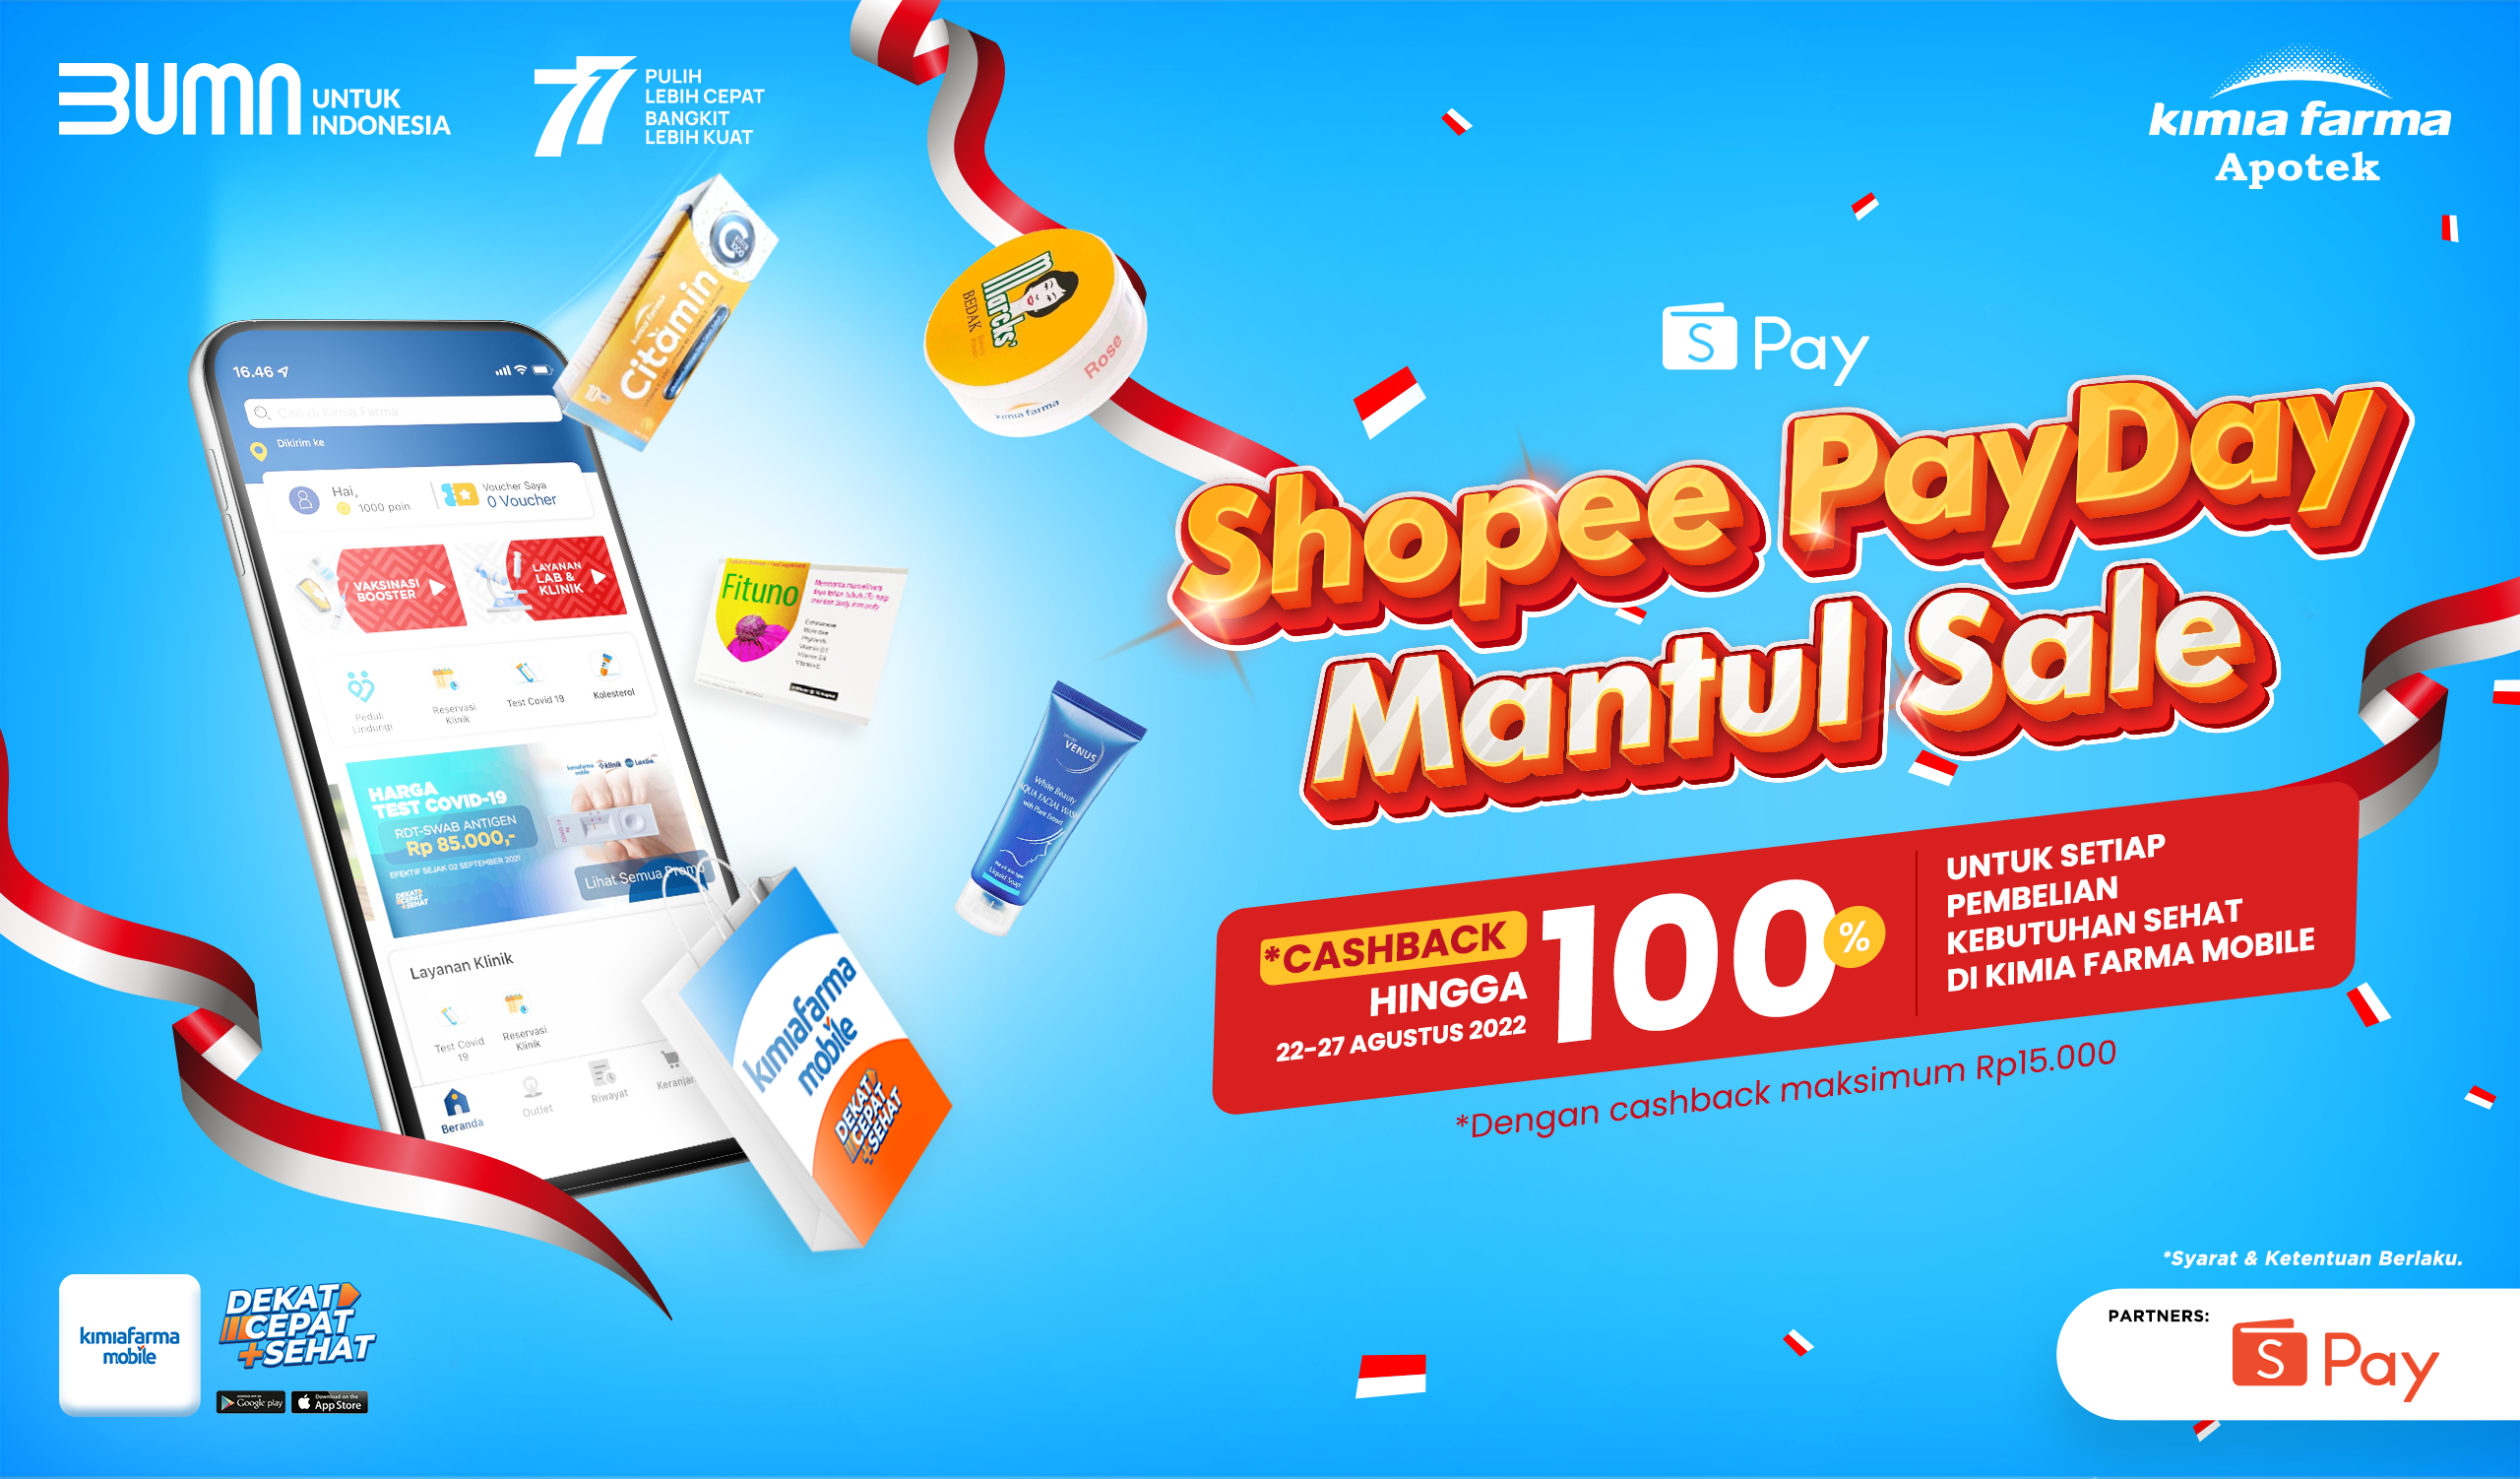 Read more about the article Shopee PayDay Mantul Sale di Kimia Farma Mobile